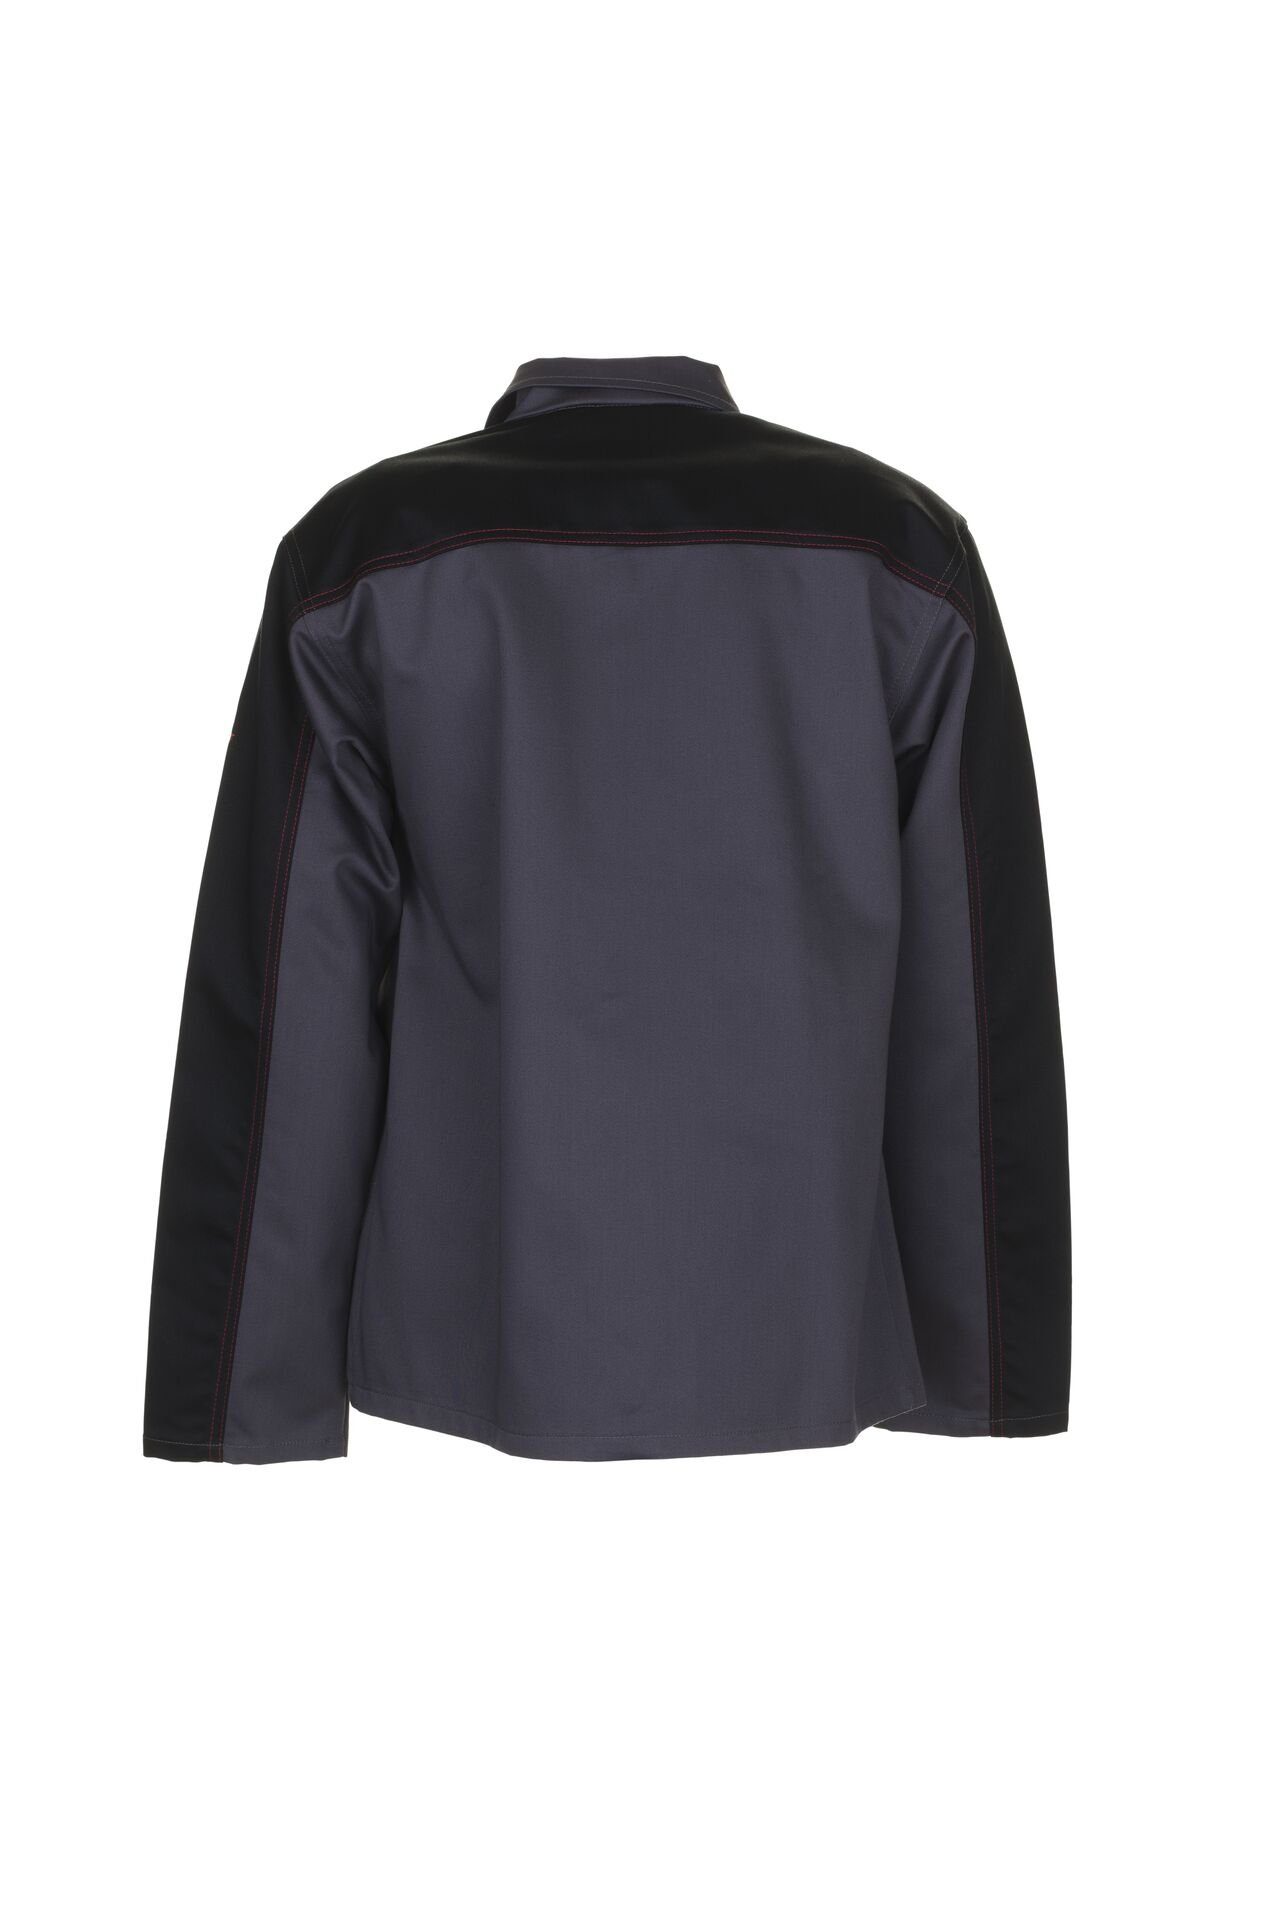 Planam Arbeitshose Jacke Shield Größe 52 (1-tlg) grau/schwarz Weld